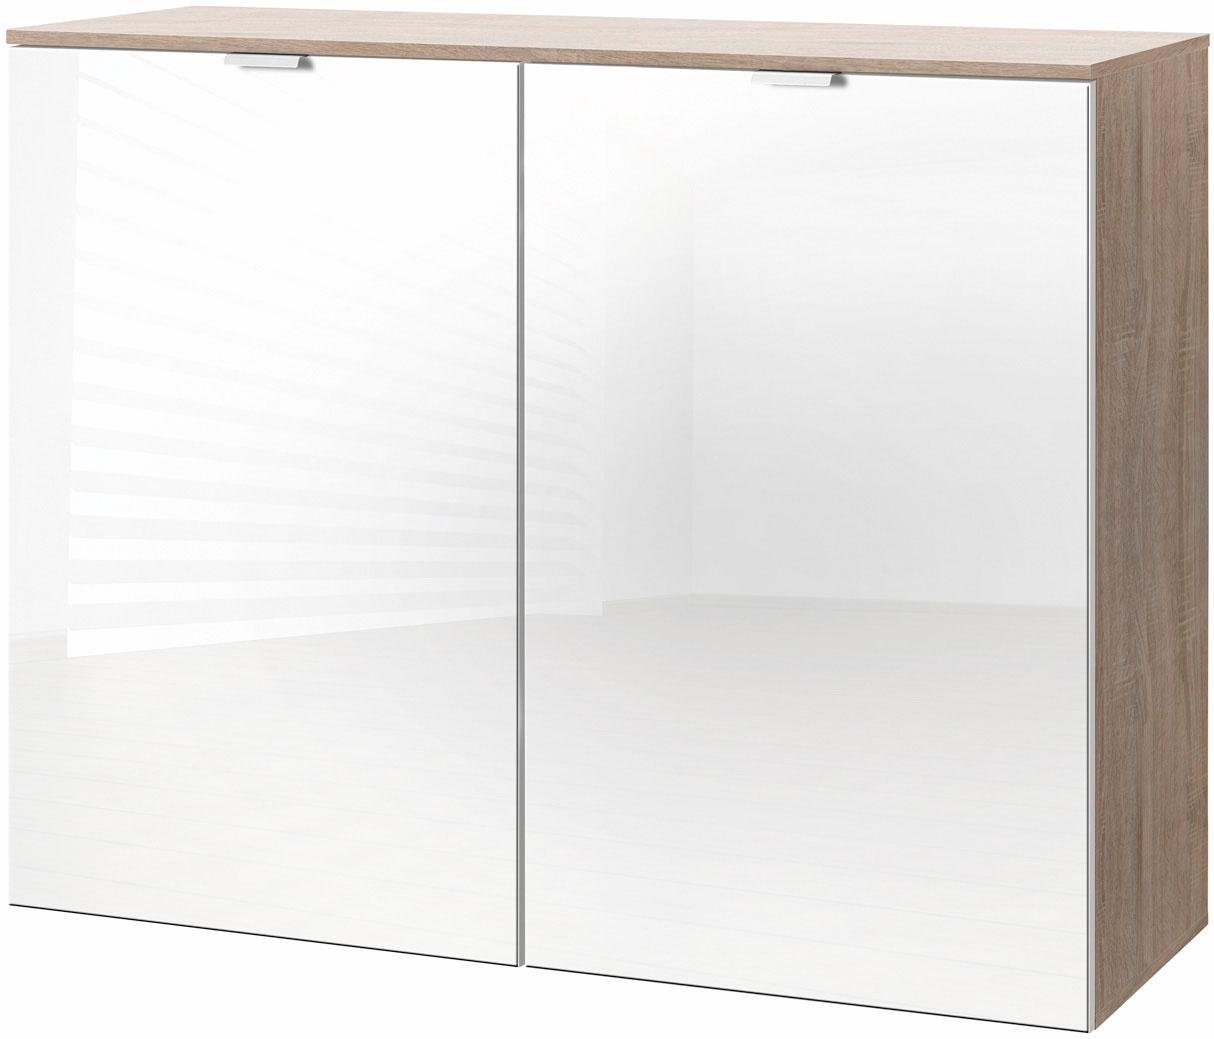 Express Solutions Kommode, Breite 100 cm, mit Glas-HomeTrends